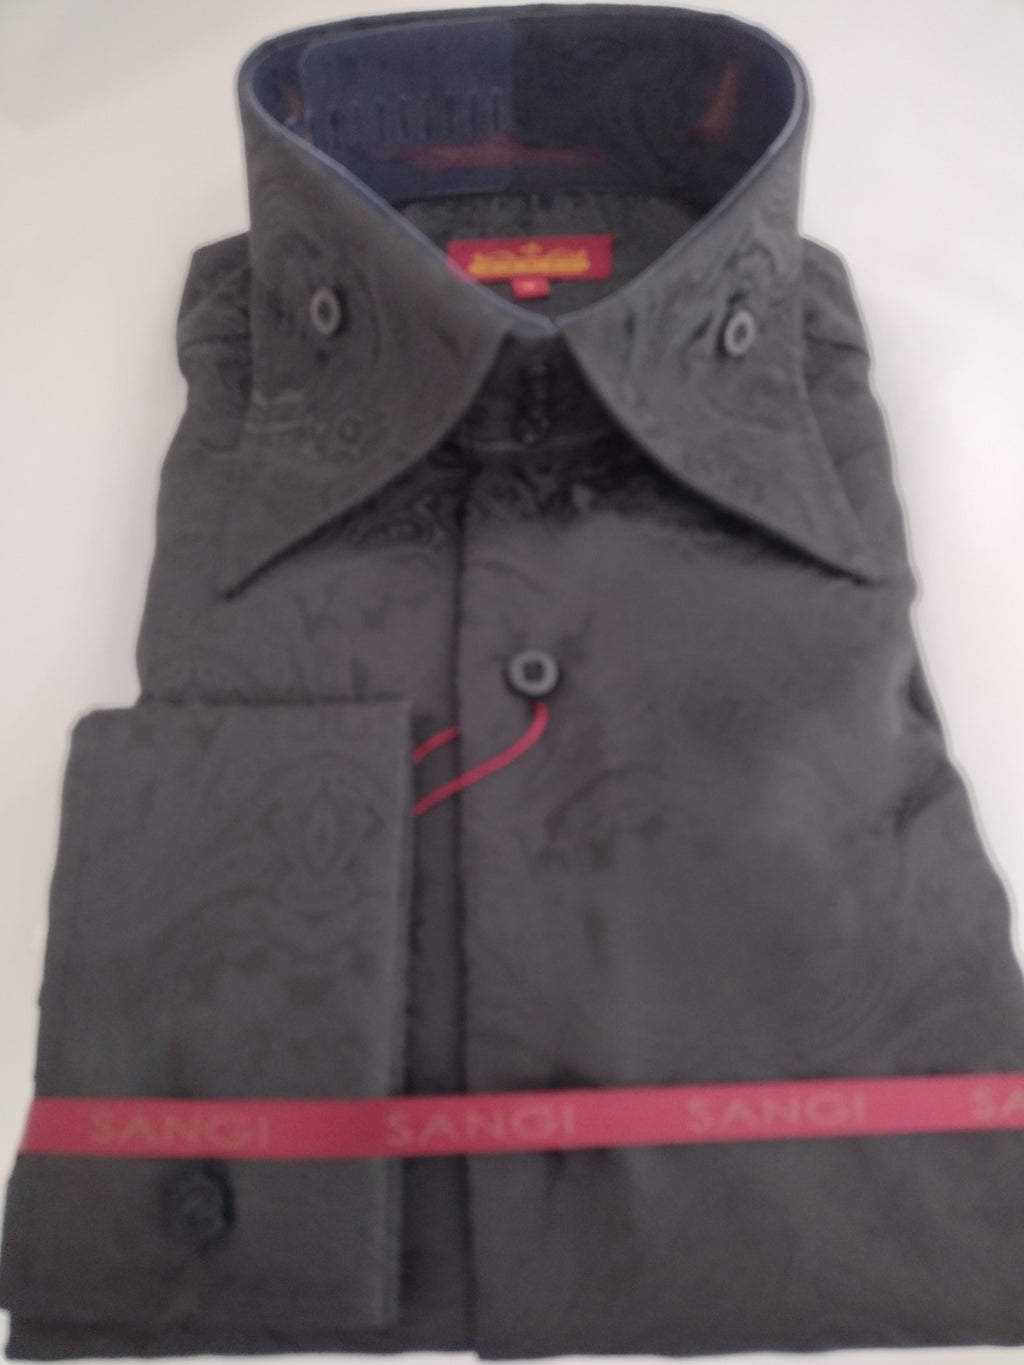 Mens All Black Intricate High Collar French Cuff Shirt SANGI MONACO COLL. 2100